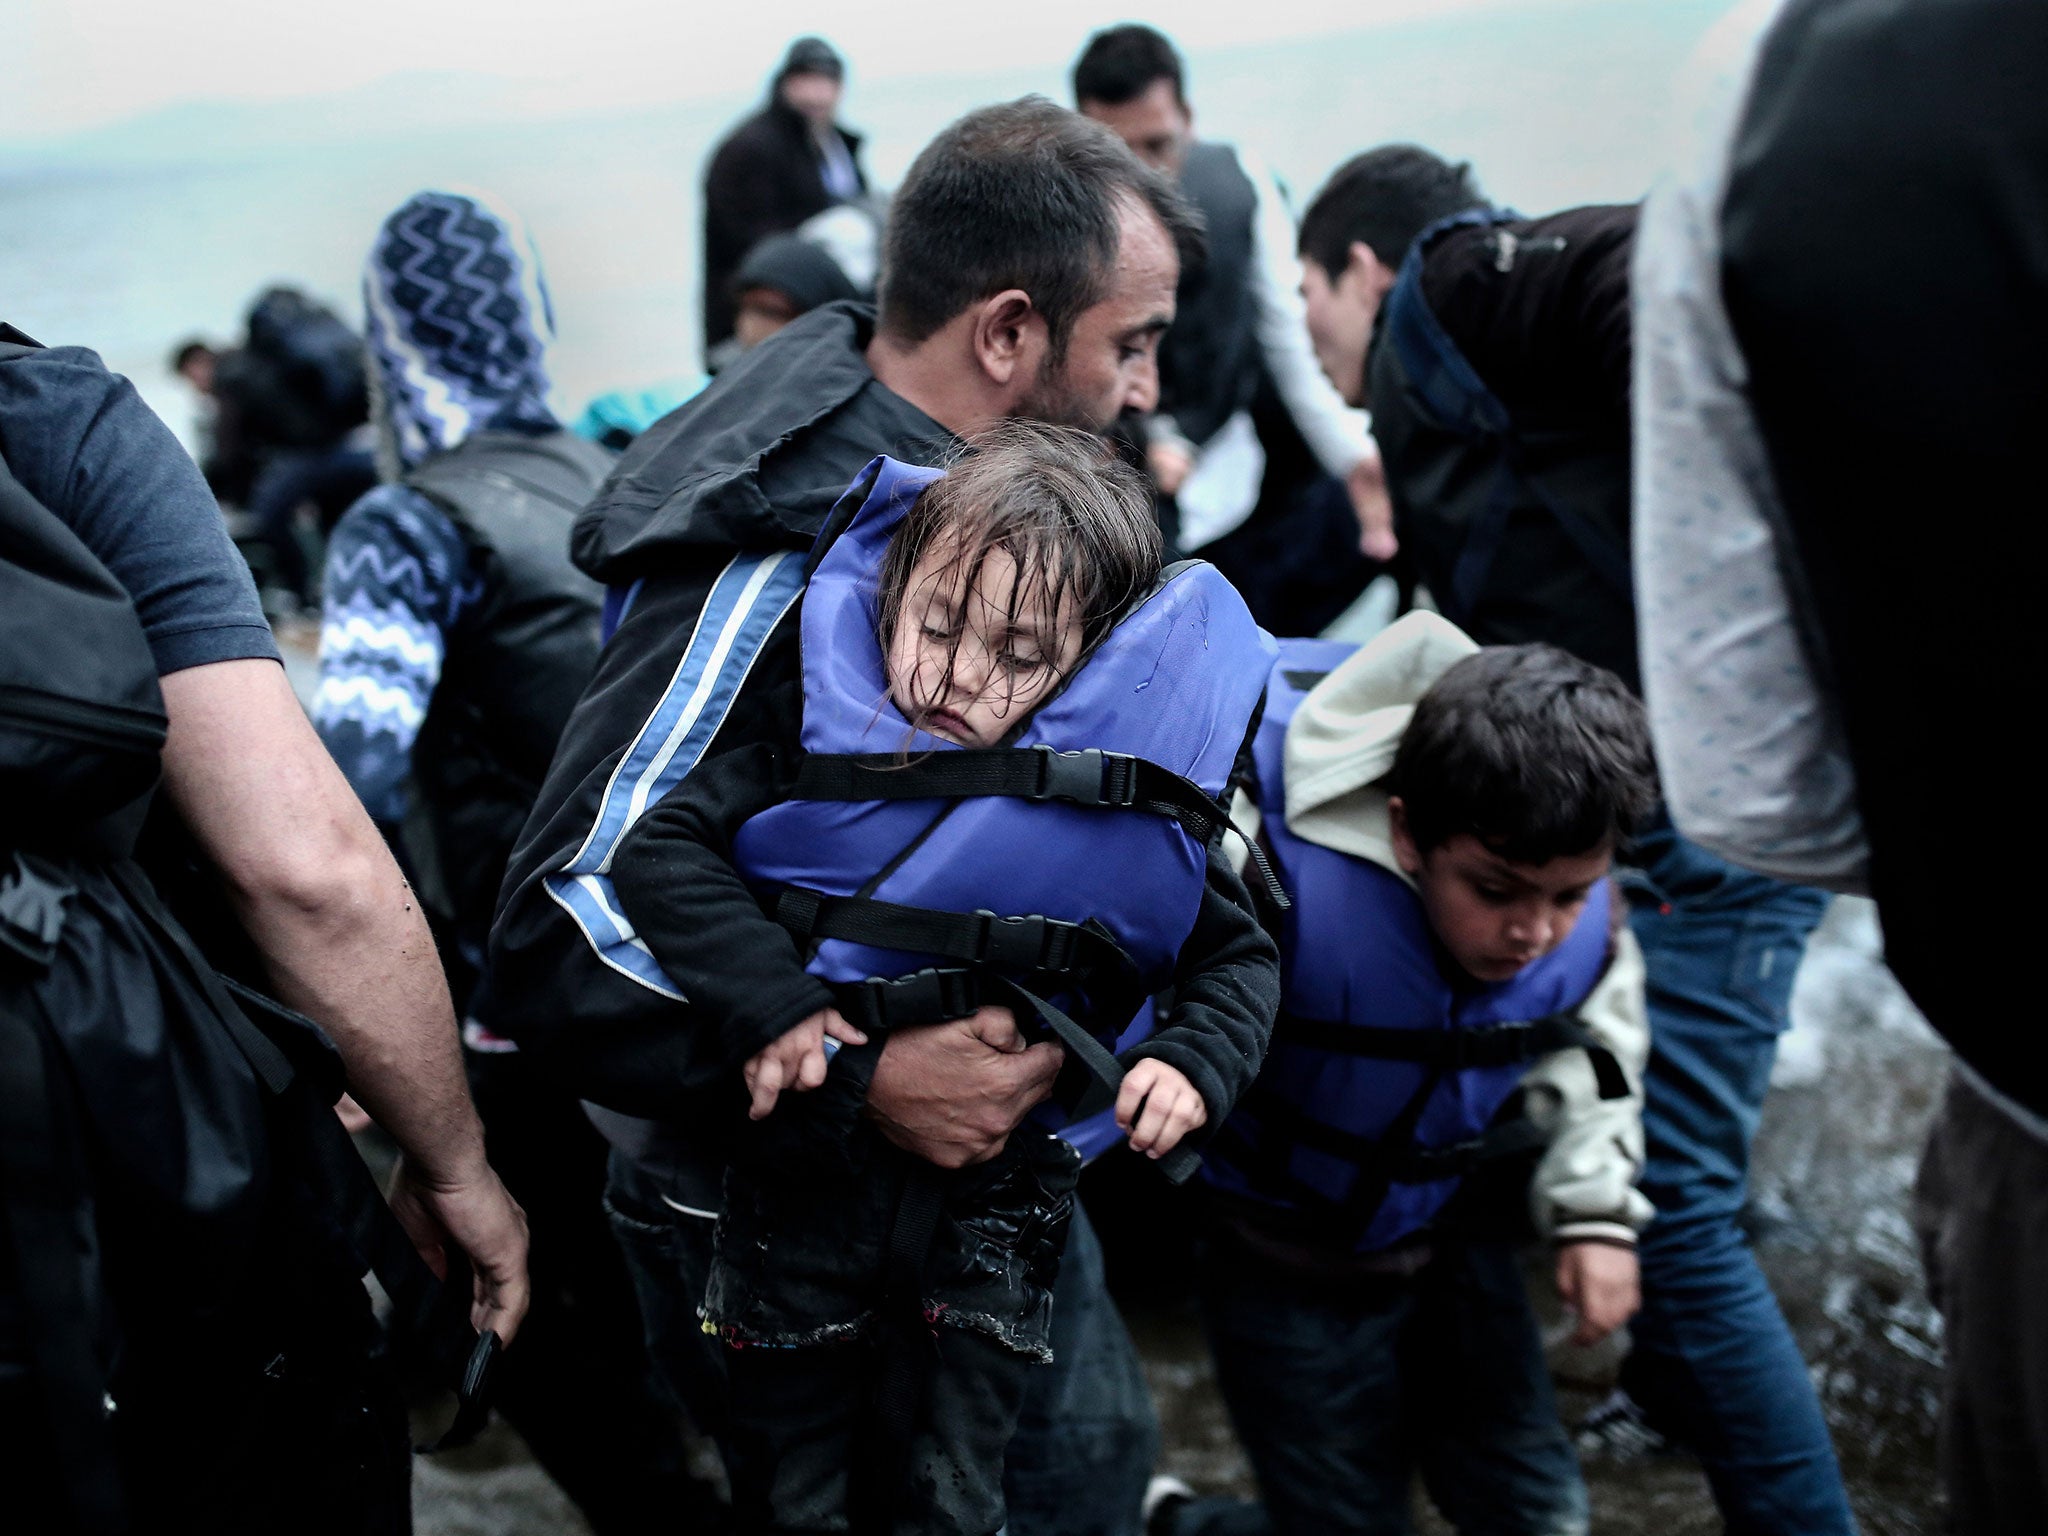 Afghan migrants crossed part of the Aegean Sea between Turkey and Greece, May 2015